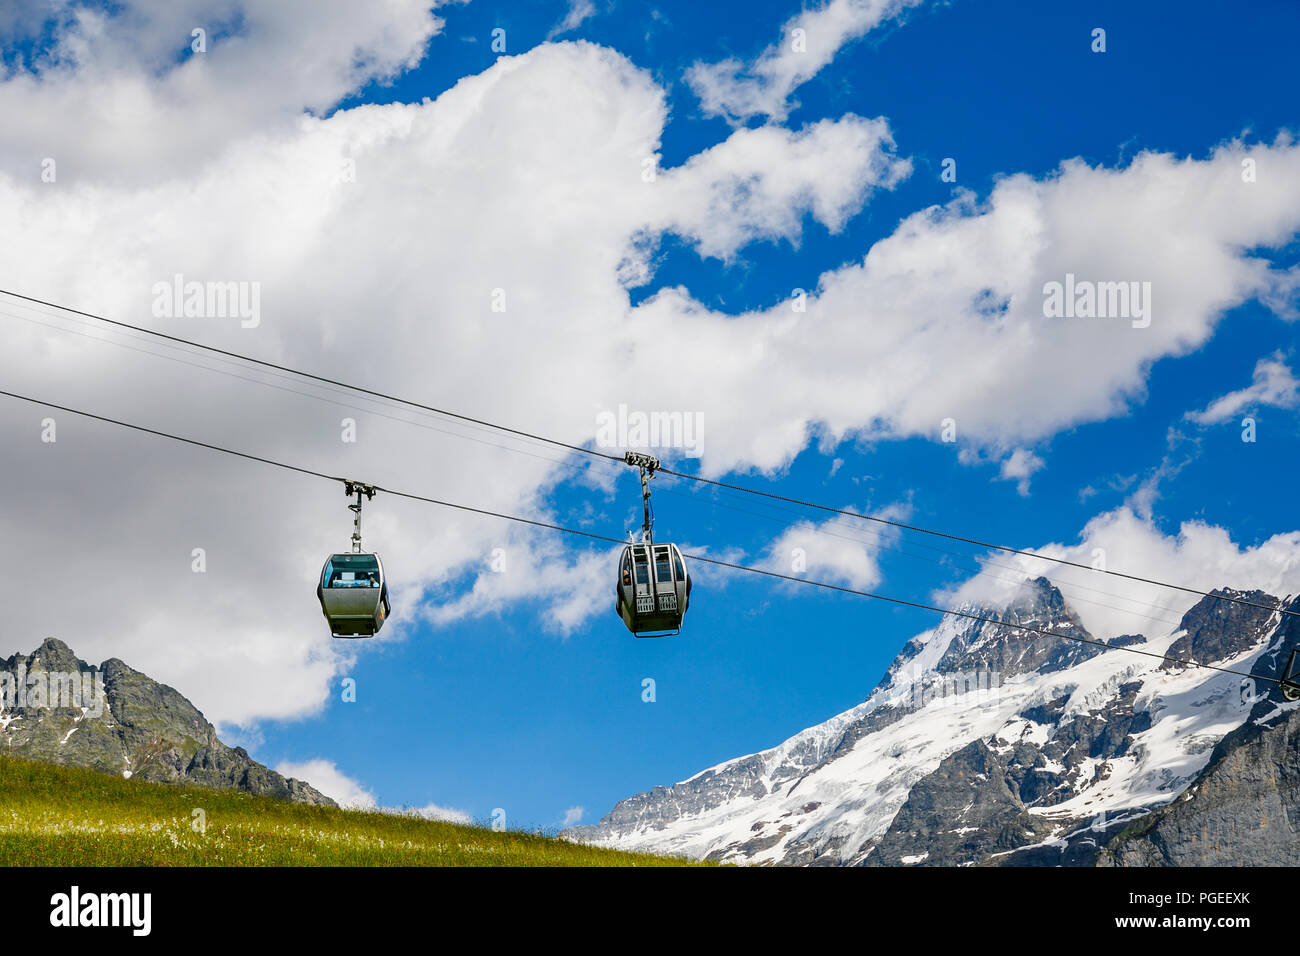 Grindelwald per primo in gondola da Bort mid-stazione, due vetture nella regione di Jungfrau dell Oberland Bernese, Alpi, Svizzera Foto Stock